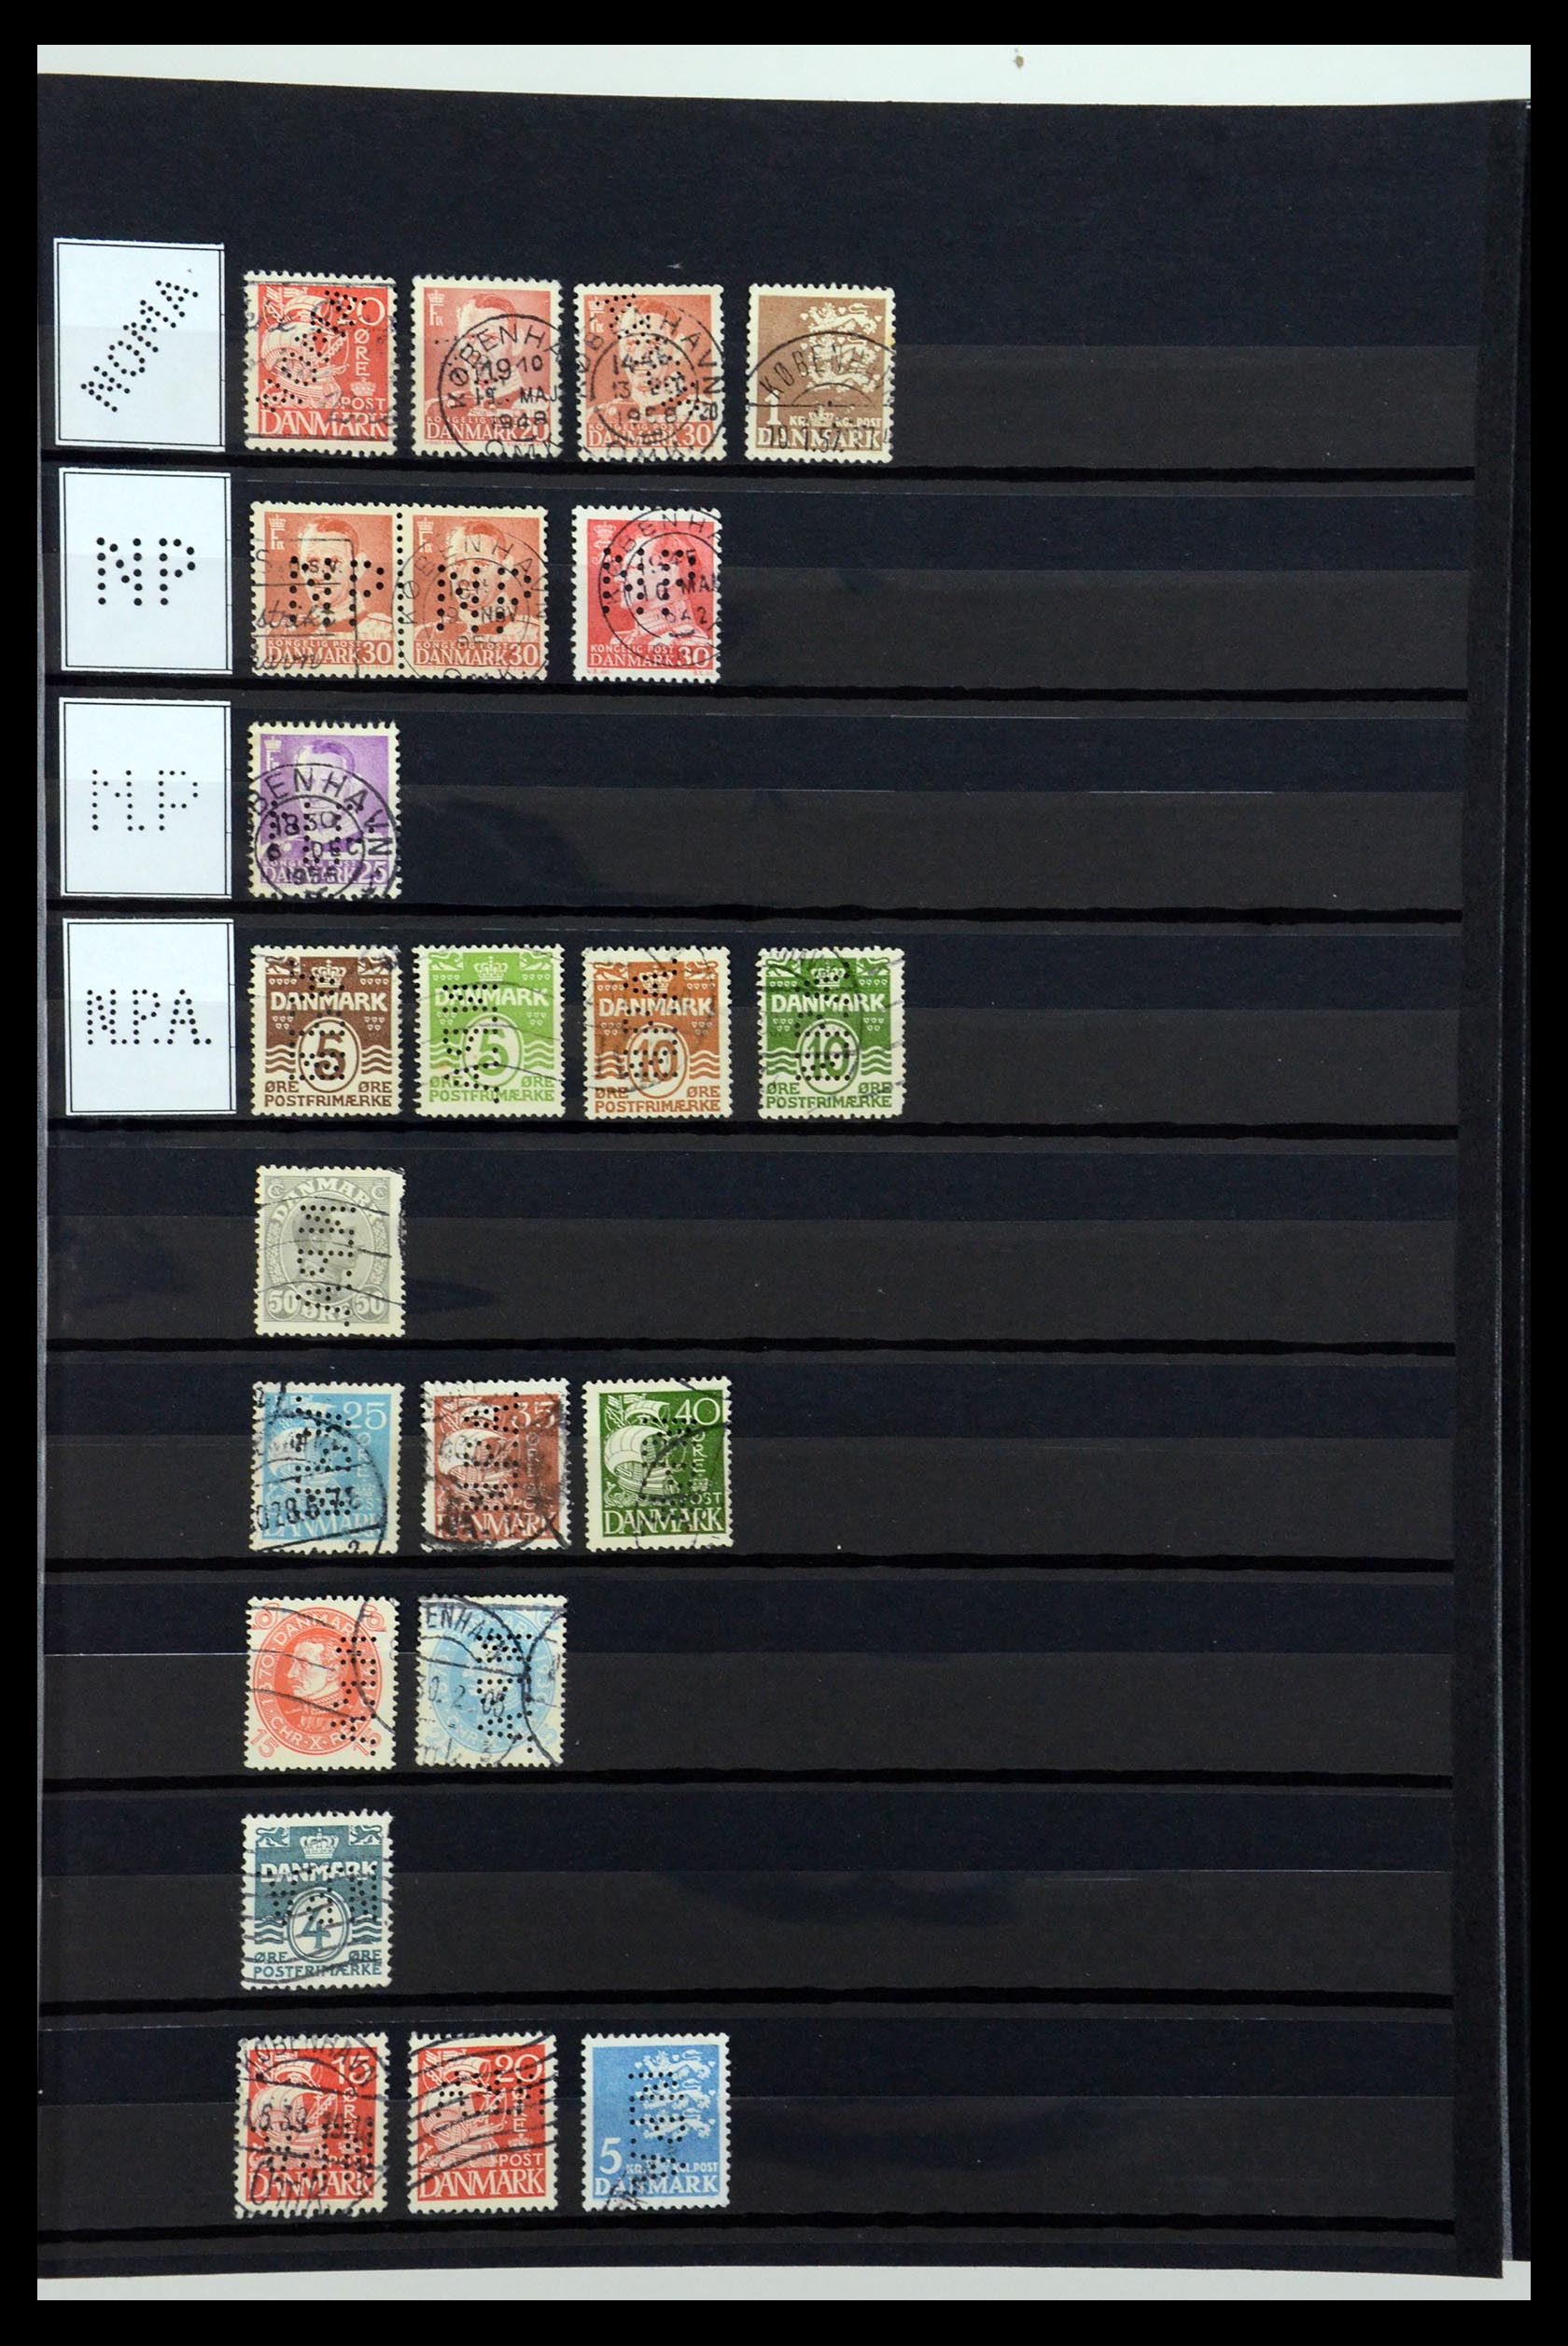 36396 182 - Stamp collection 36396 Denmark perfins.